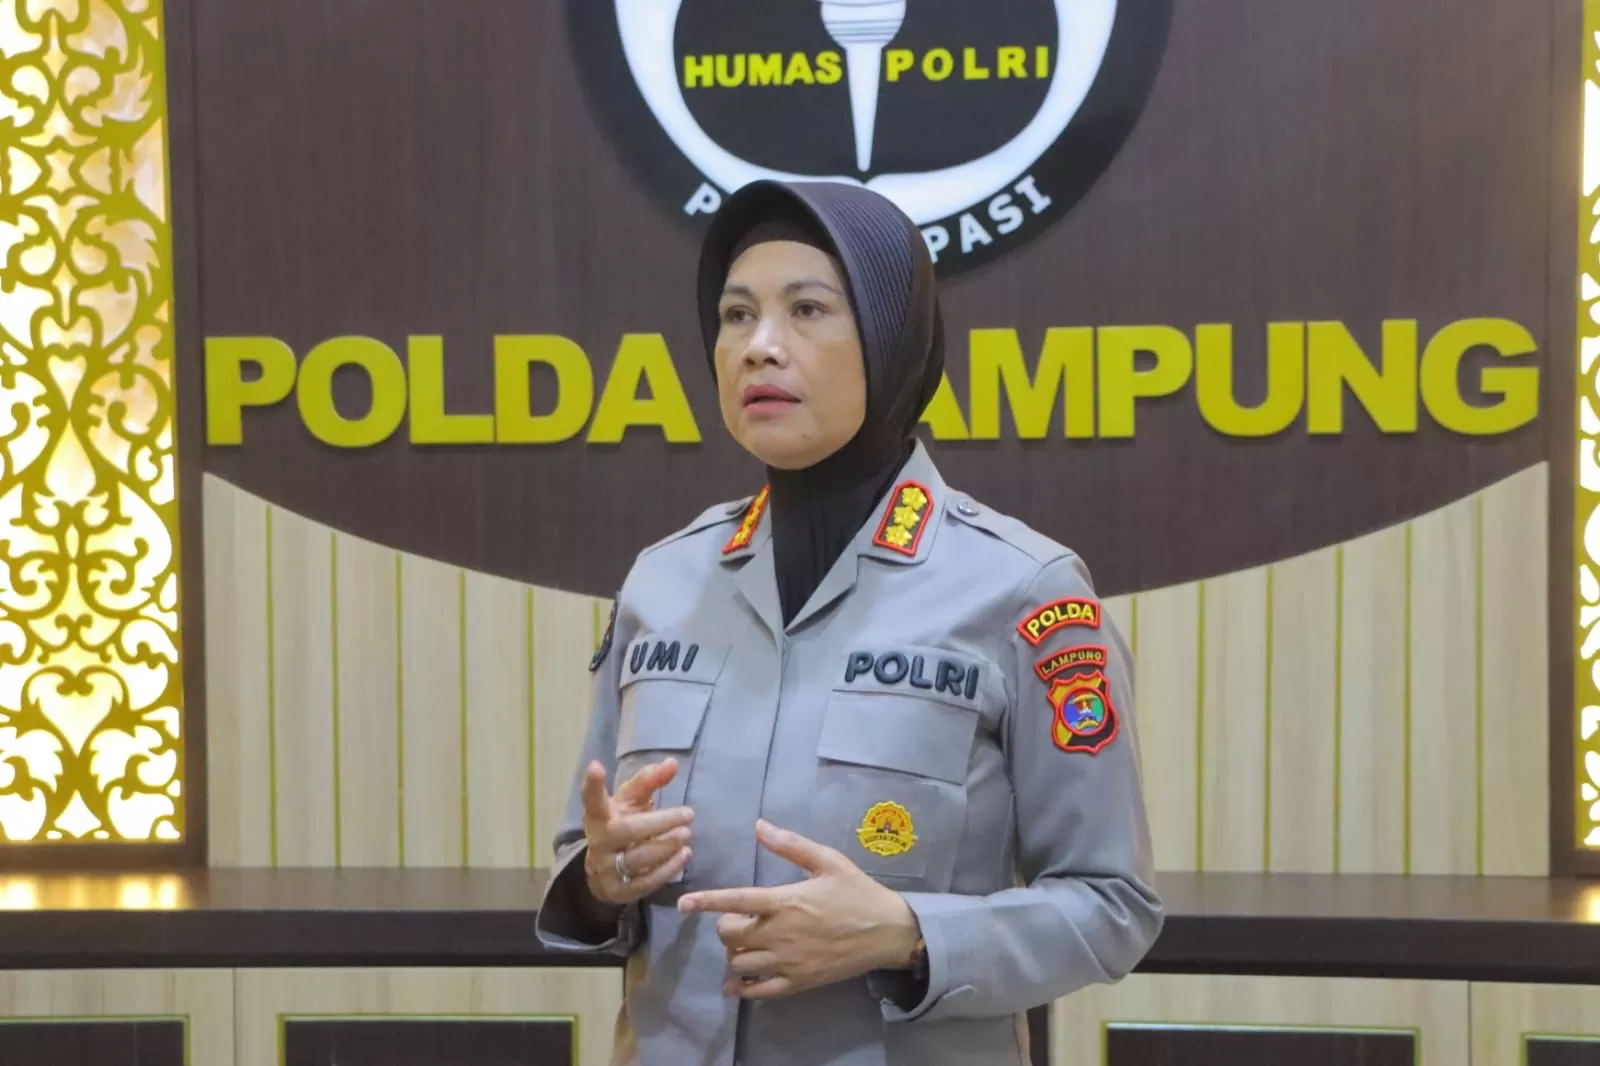 Polda Lampung Tindak Lanjuti Perintah Kapolri Soal Penggunaan Rotator